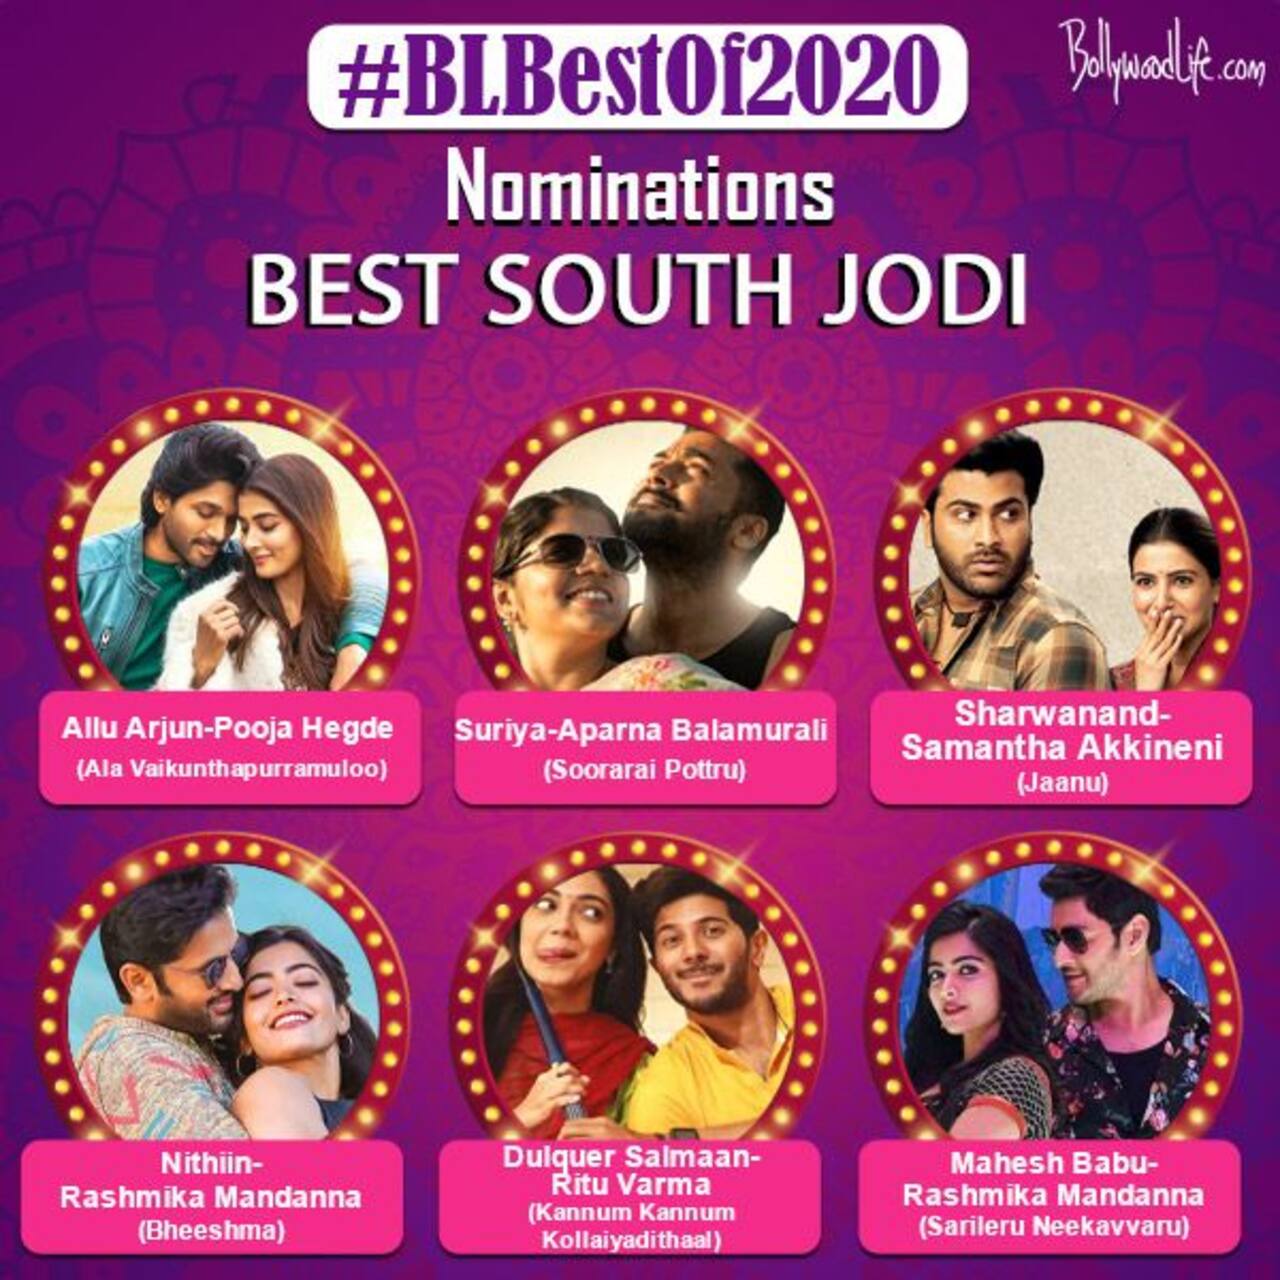 #BLBestOf2020: Allu Arjun-Pooja Hegde, Suriya Apana Balamurali — Which is the best south jodi of the year?